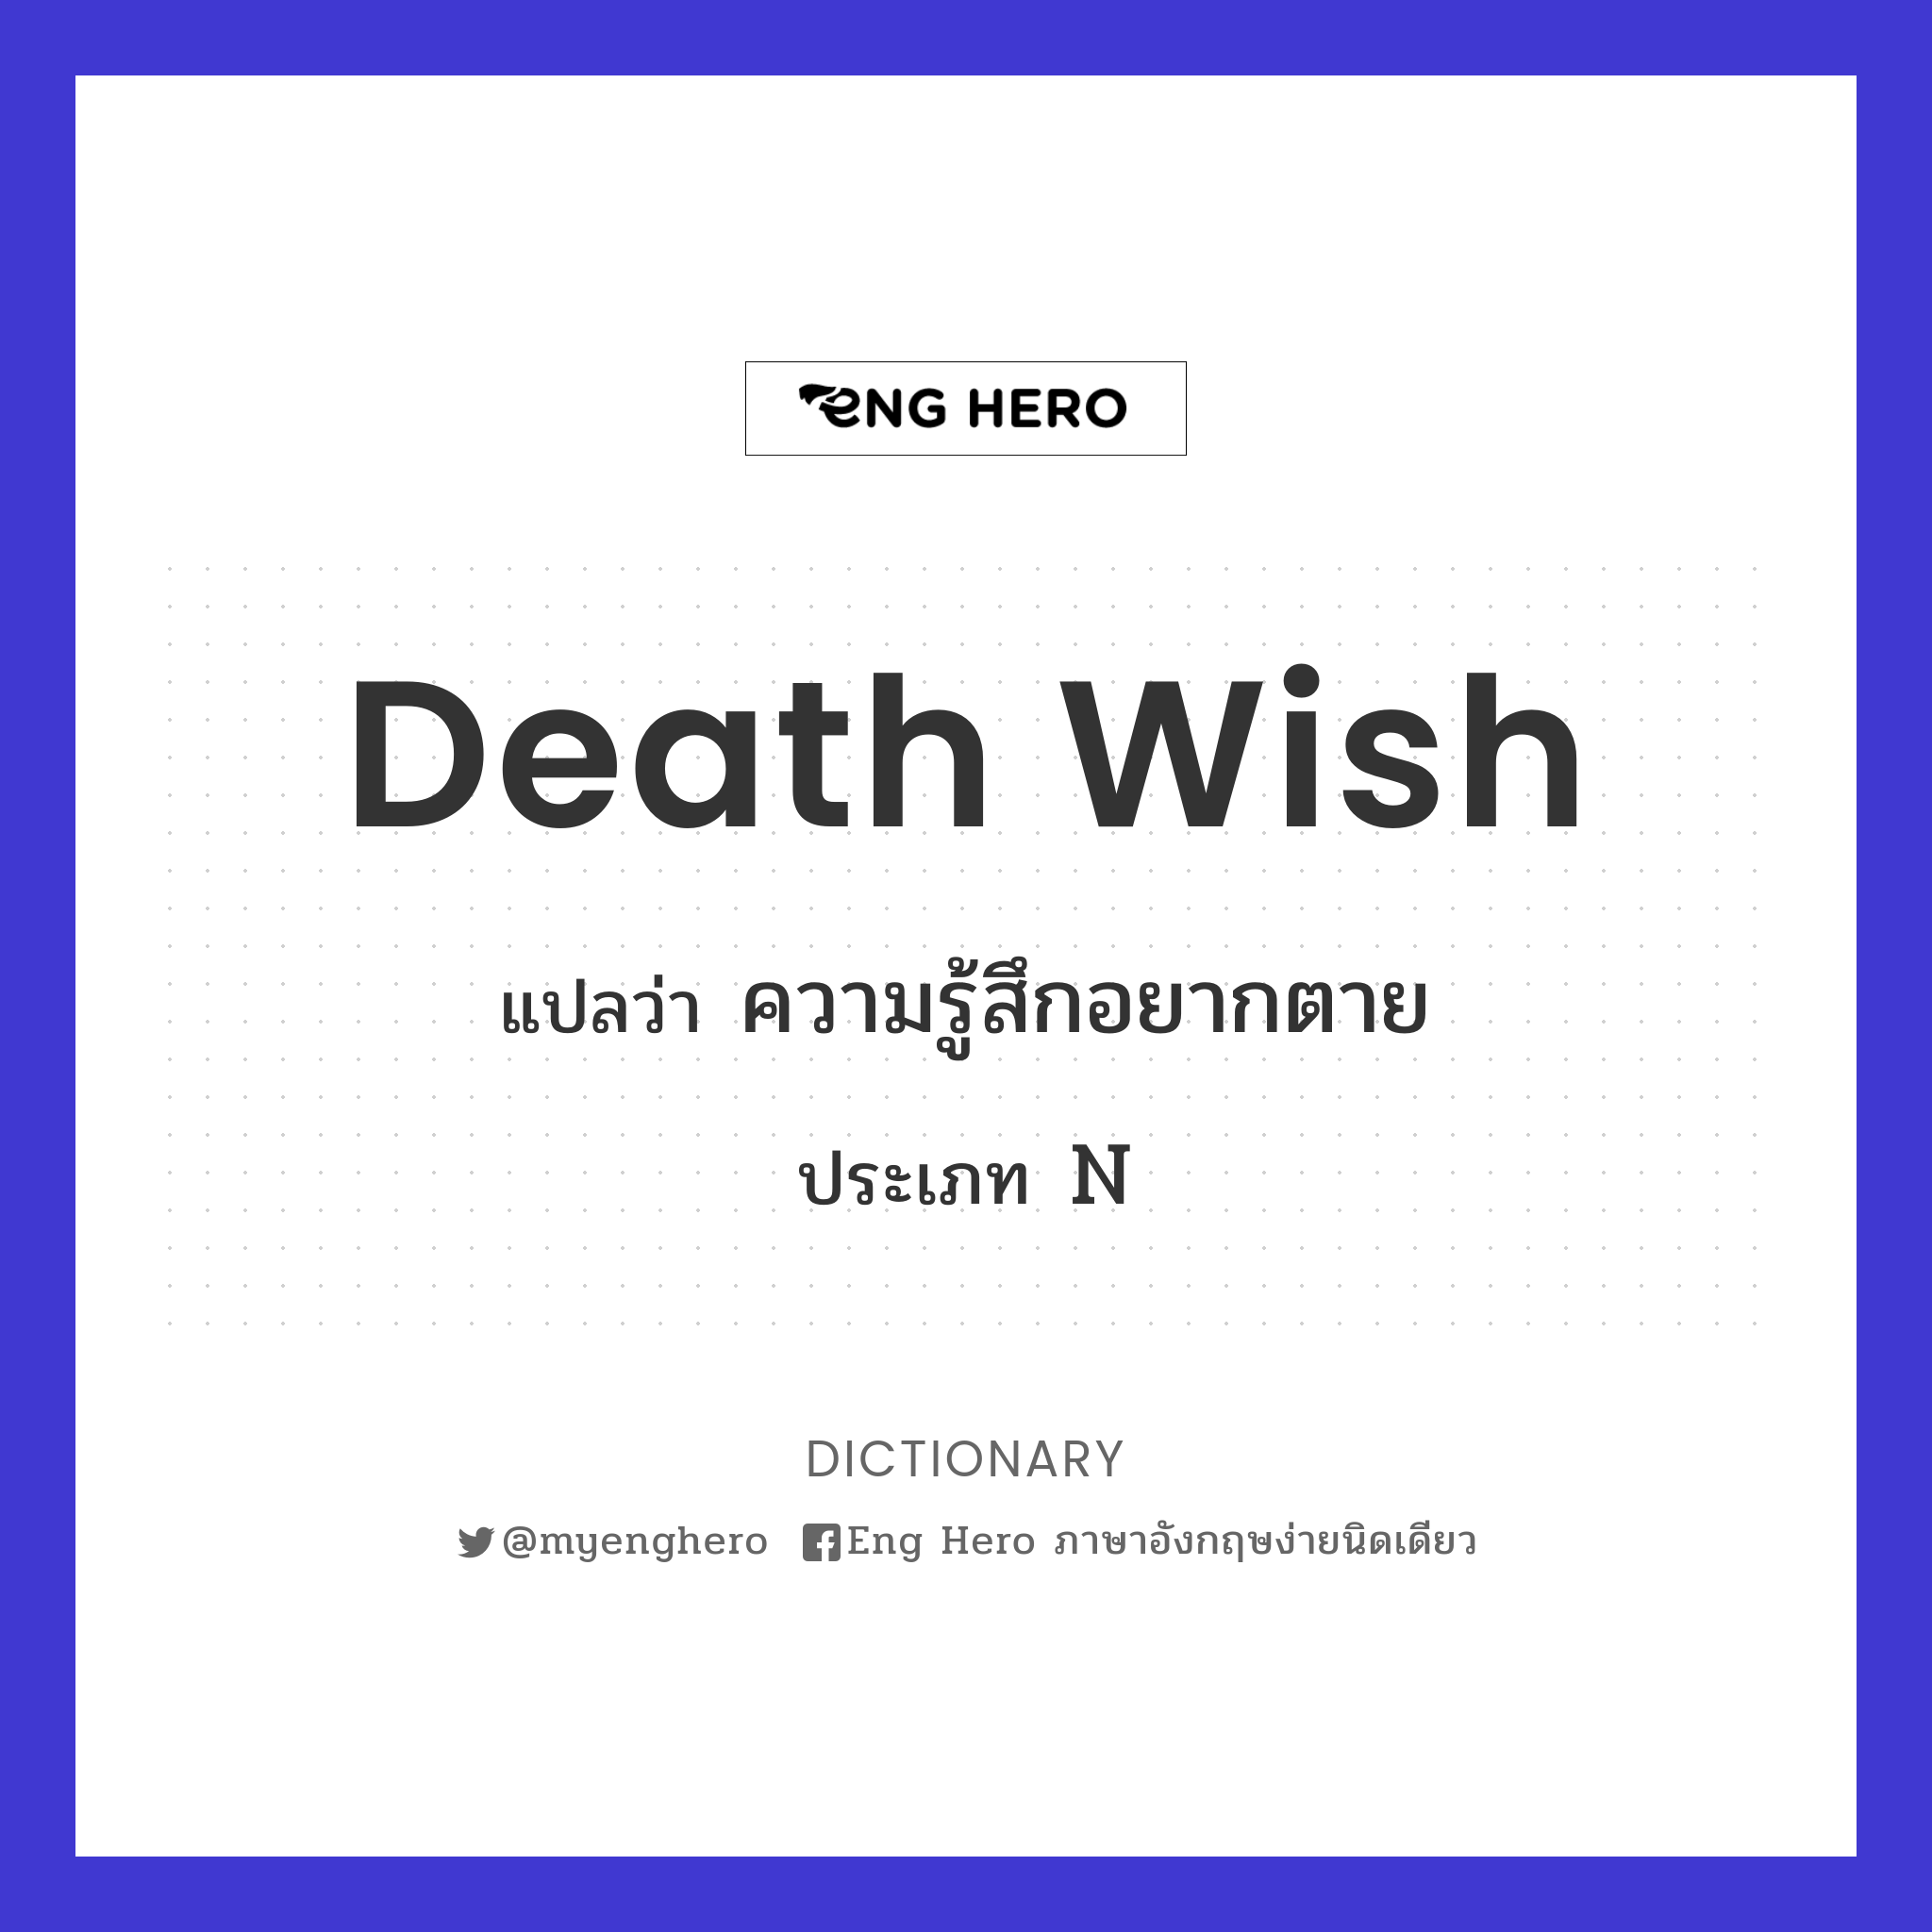 death wish